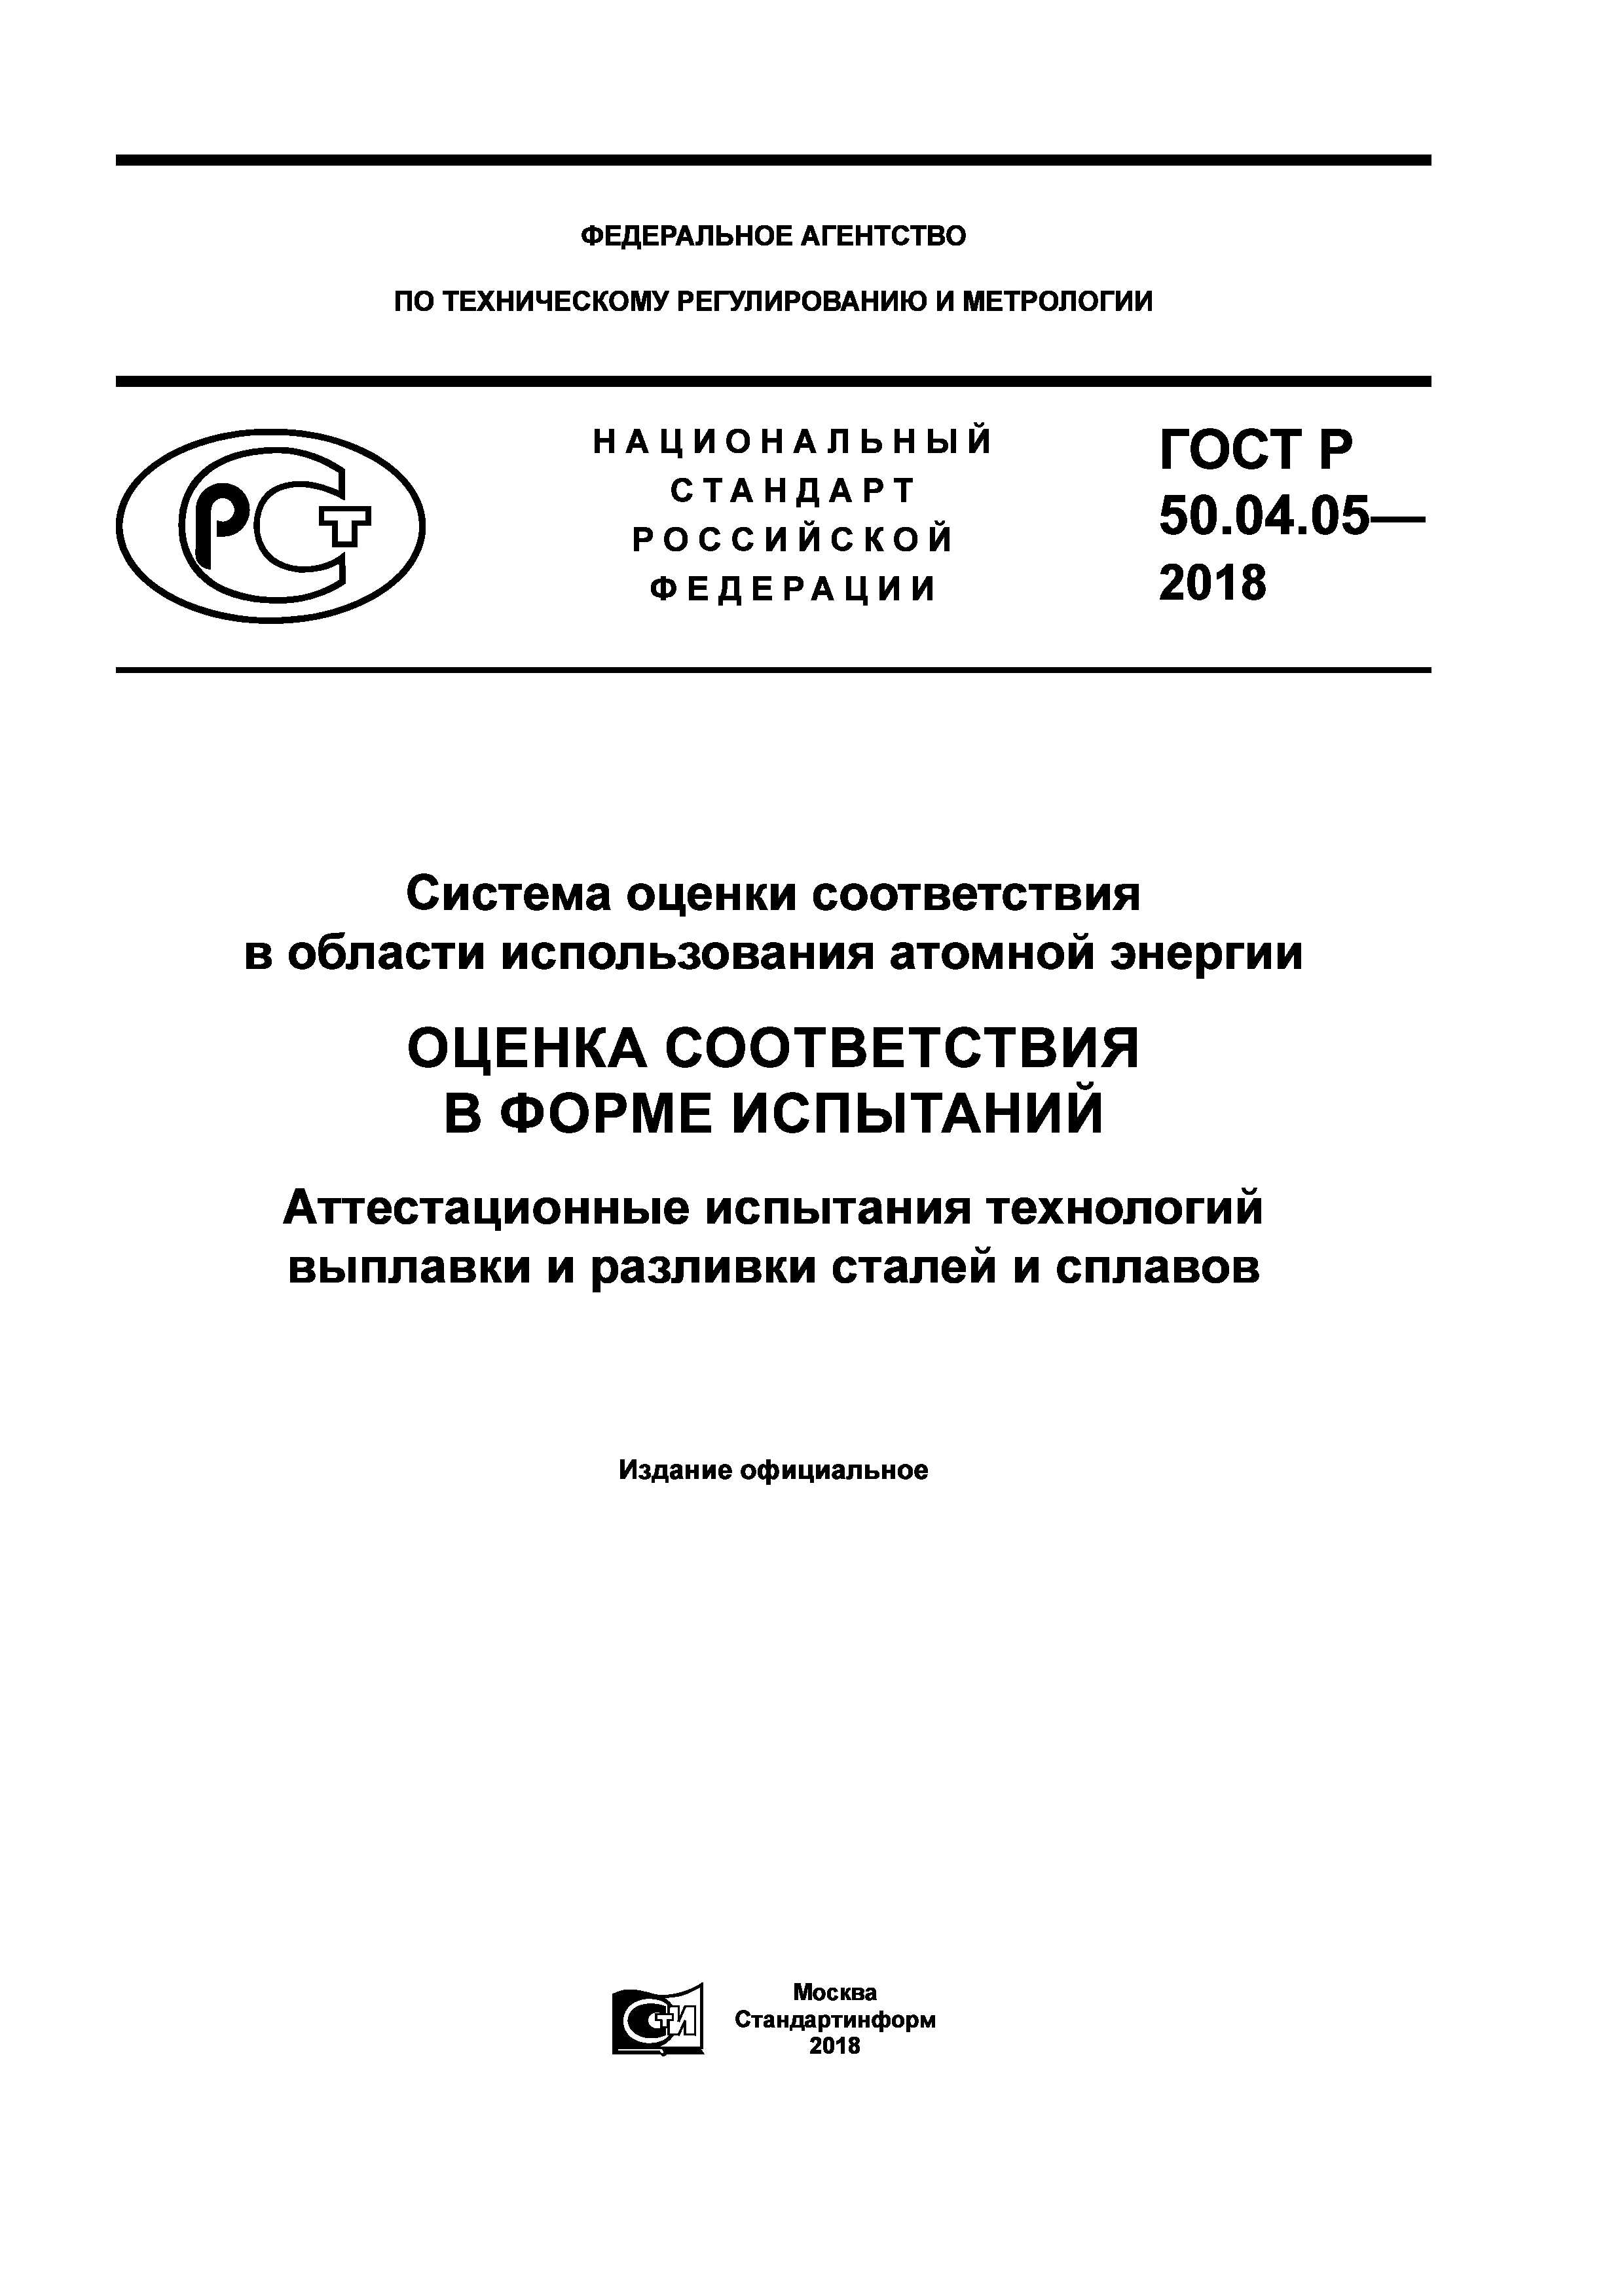 ГОСТ Р 50.04.05-2018